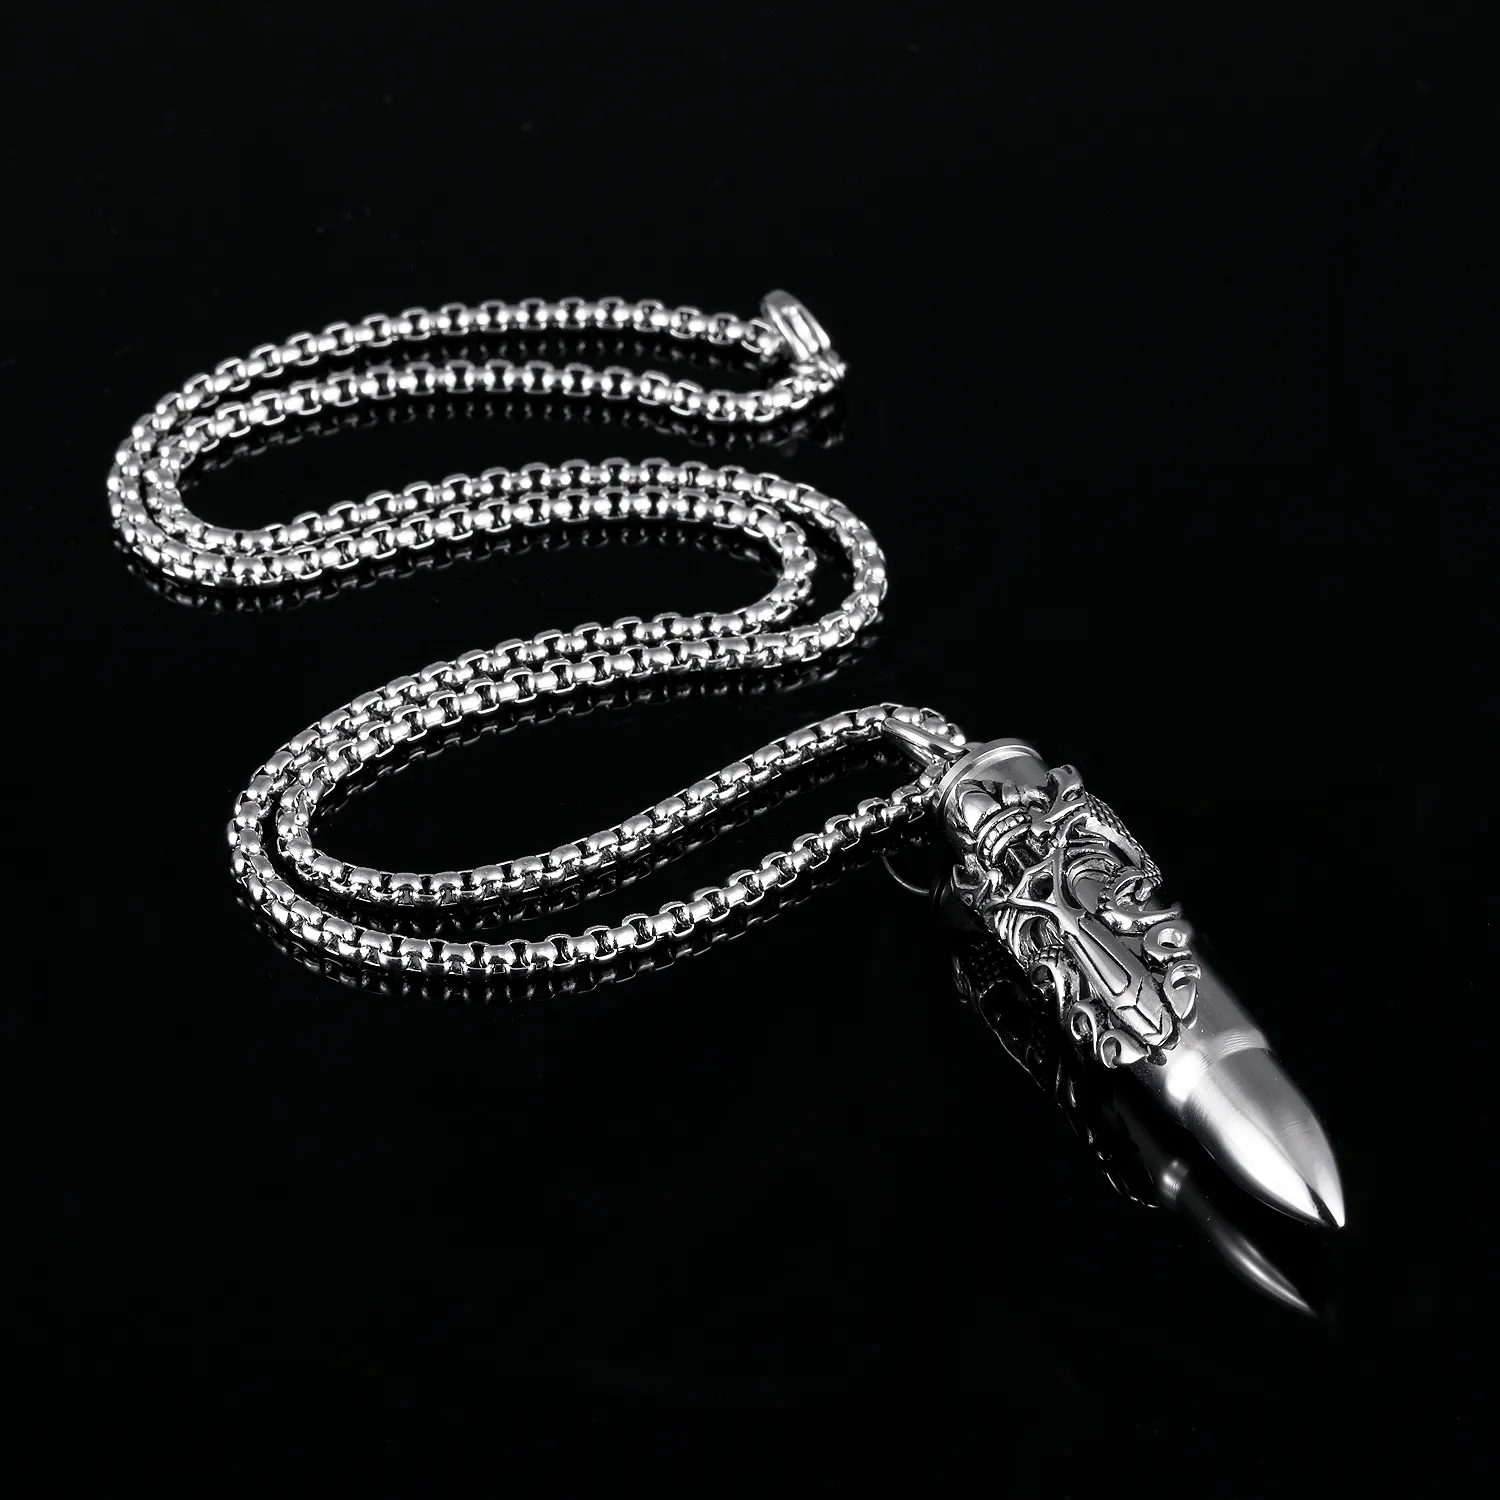 58mm Bullet Shaped Gothic Dragon Sword Medeltida Renaissance Cremation Urn Hänge Halsband i rostfritt stål